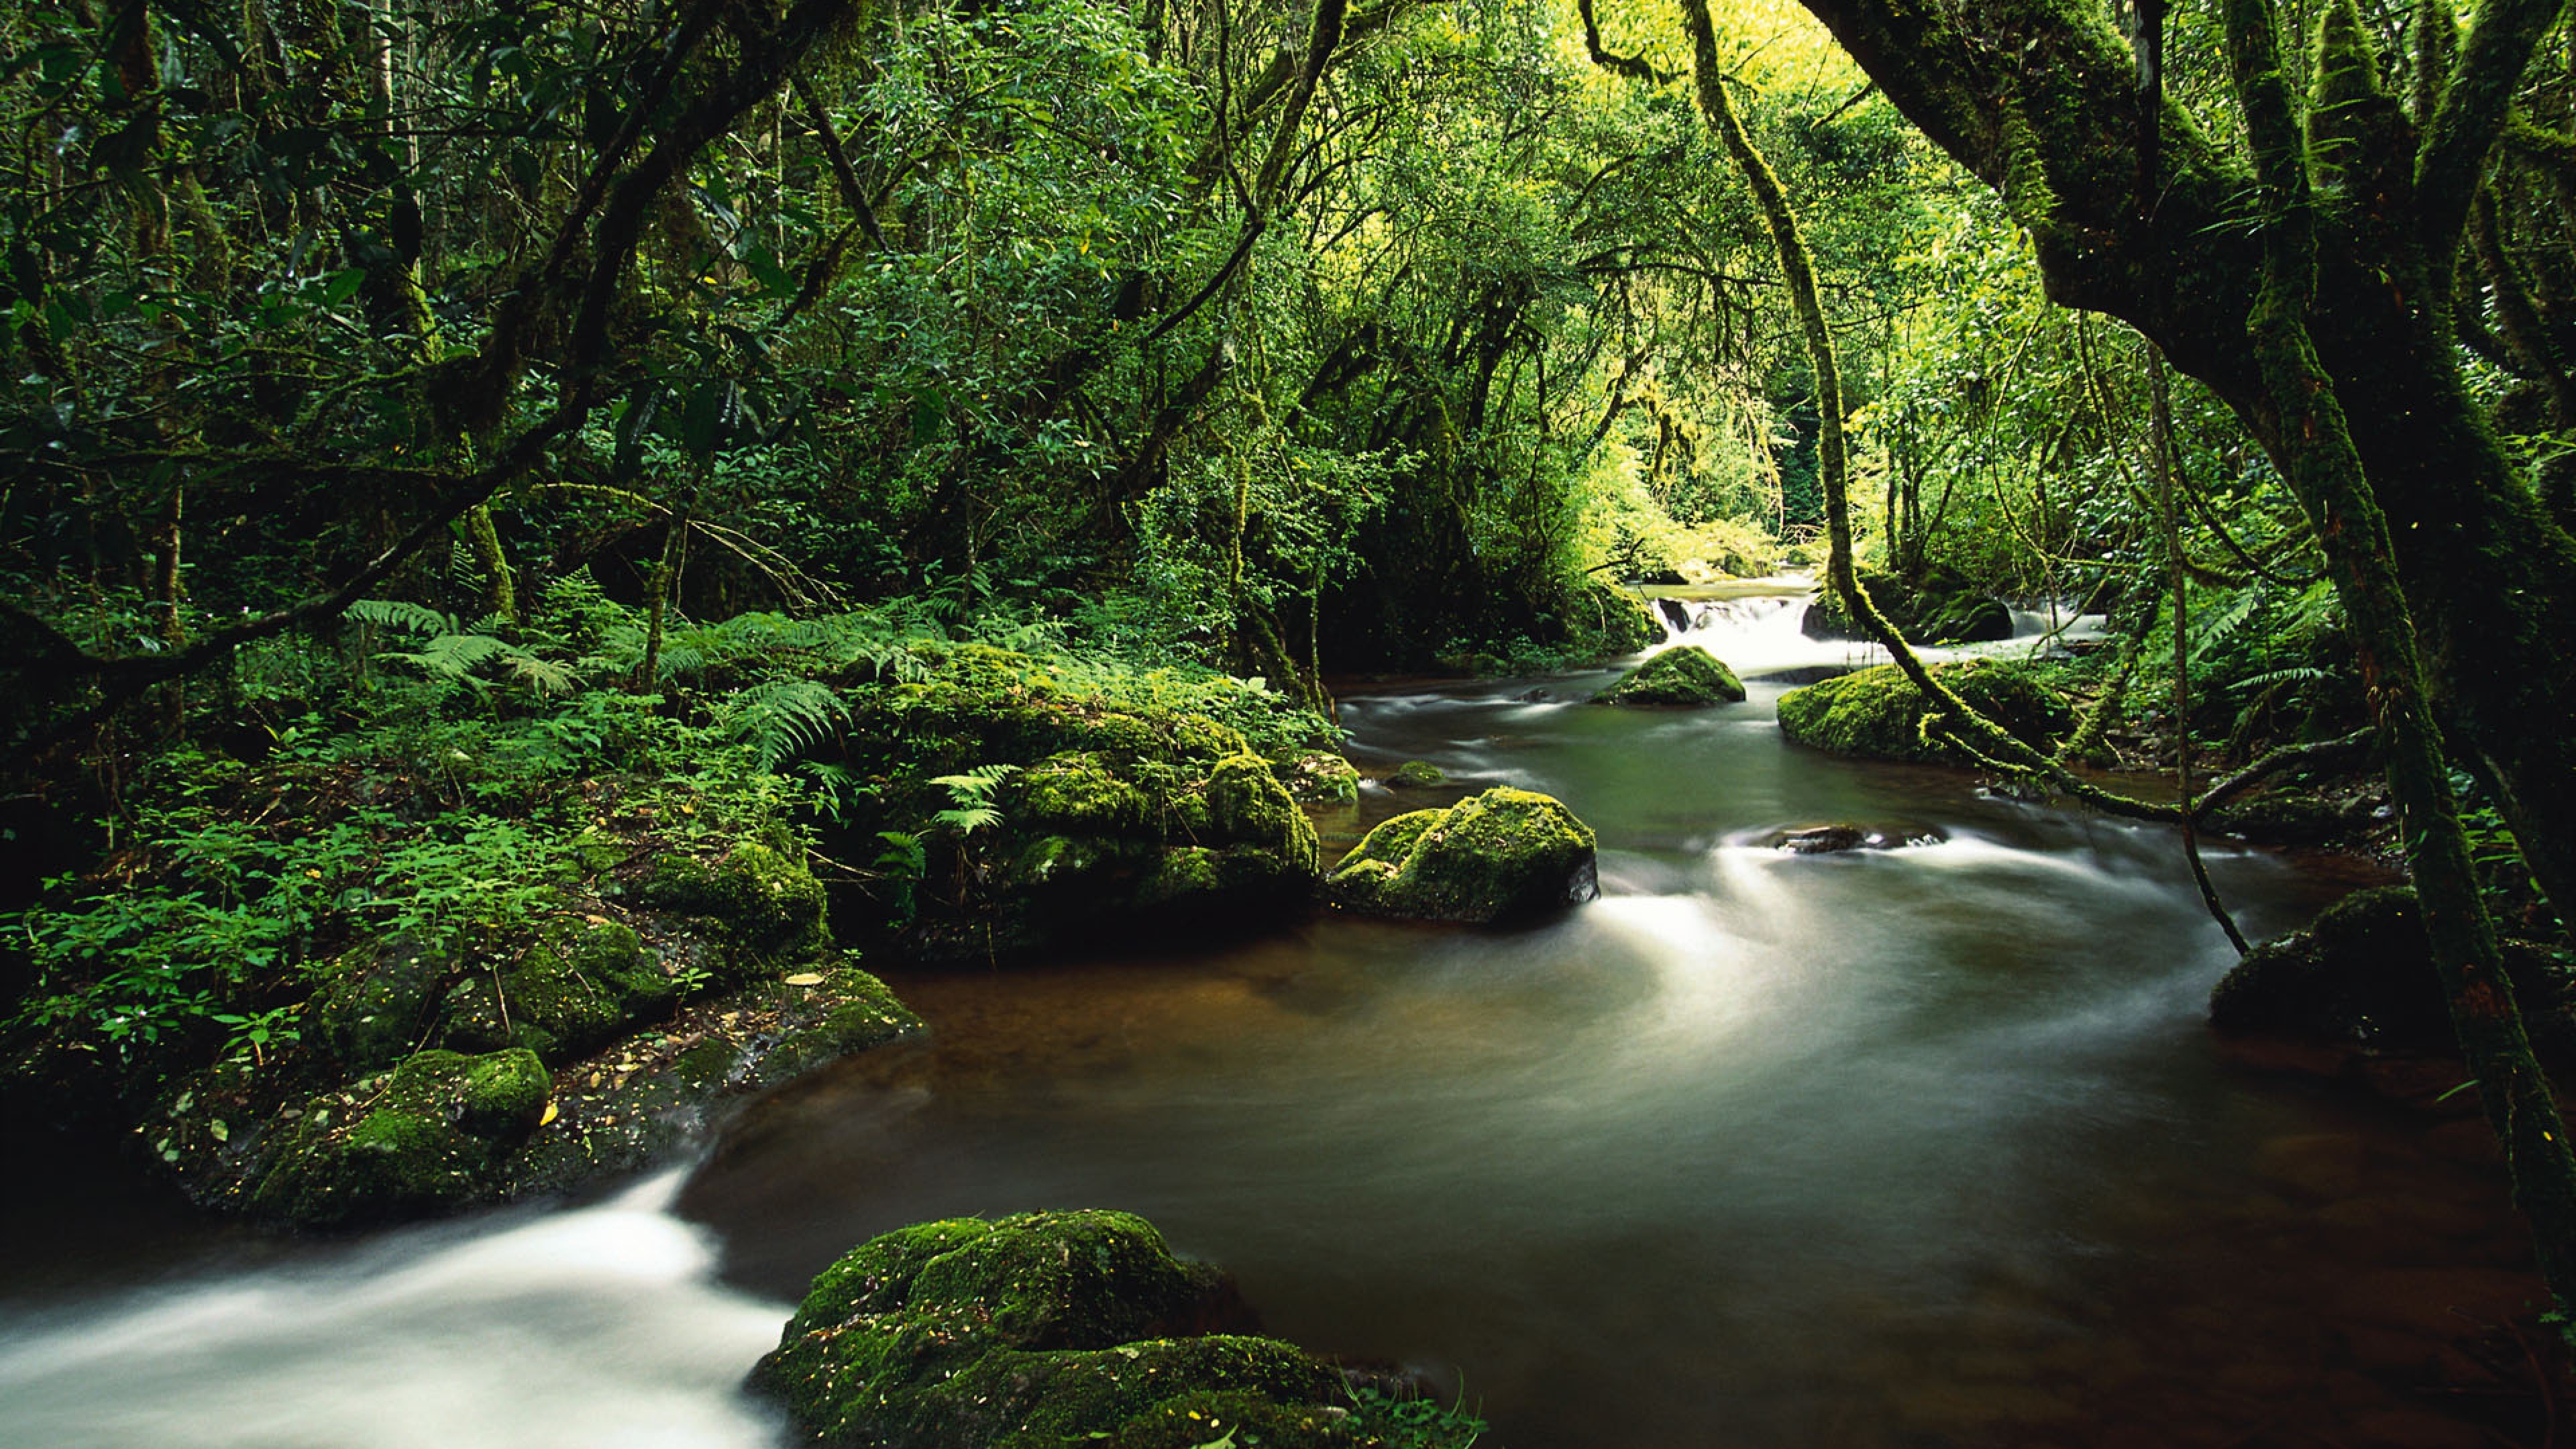 Jungle River Wallpapers, Full HD 1080p, Best HD Jungle River Images ...